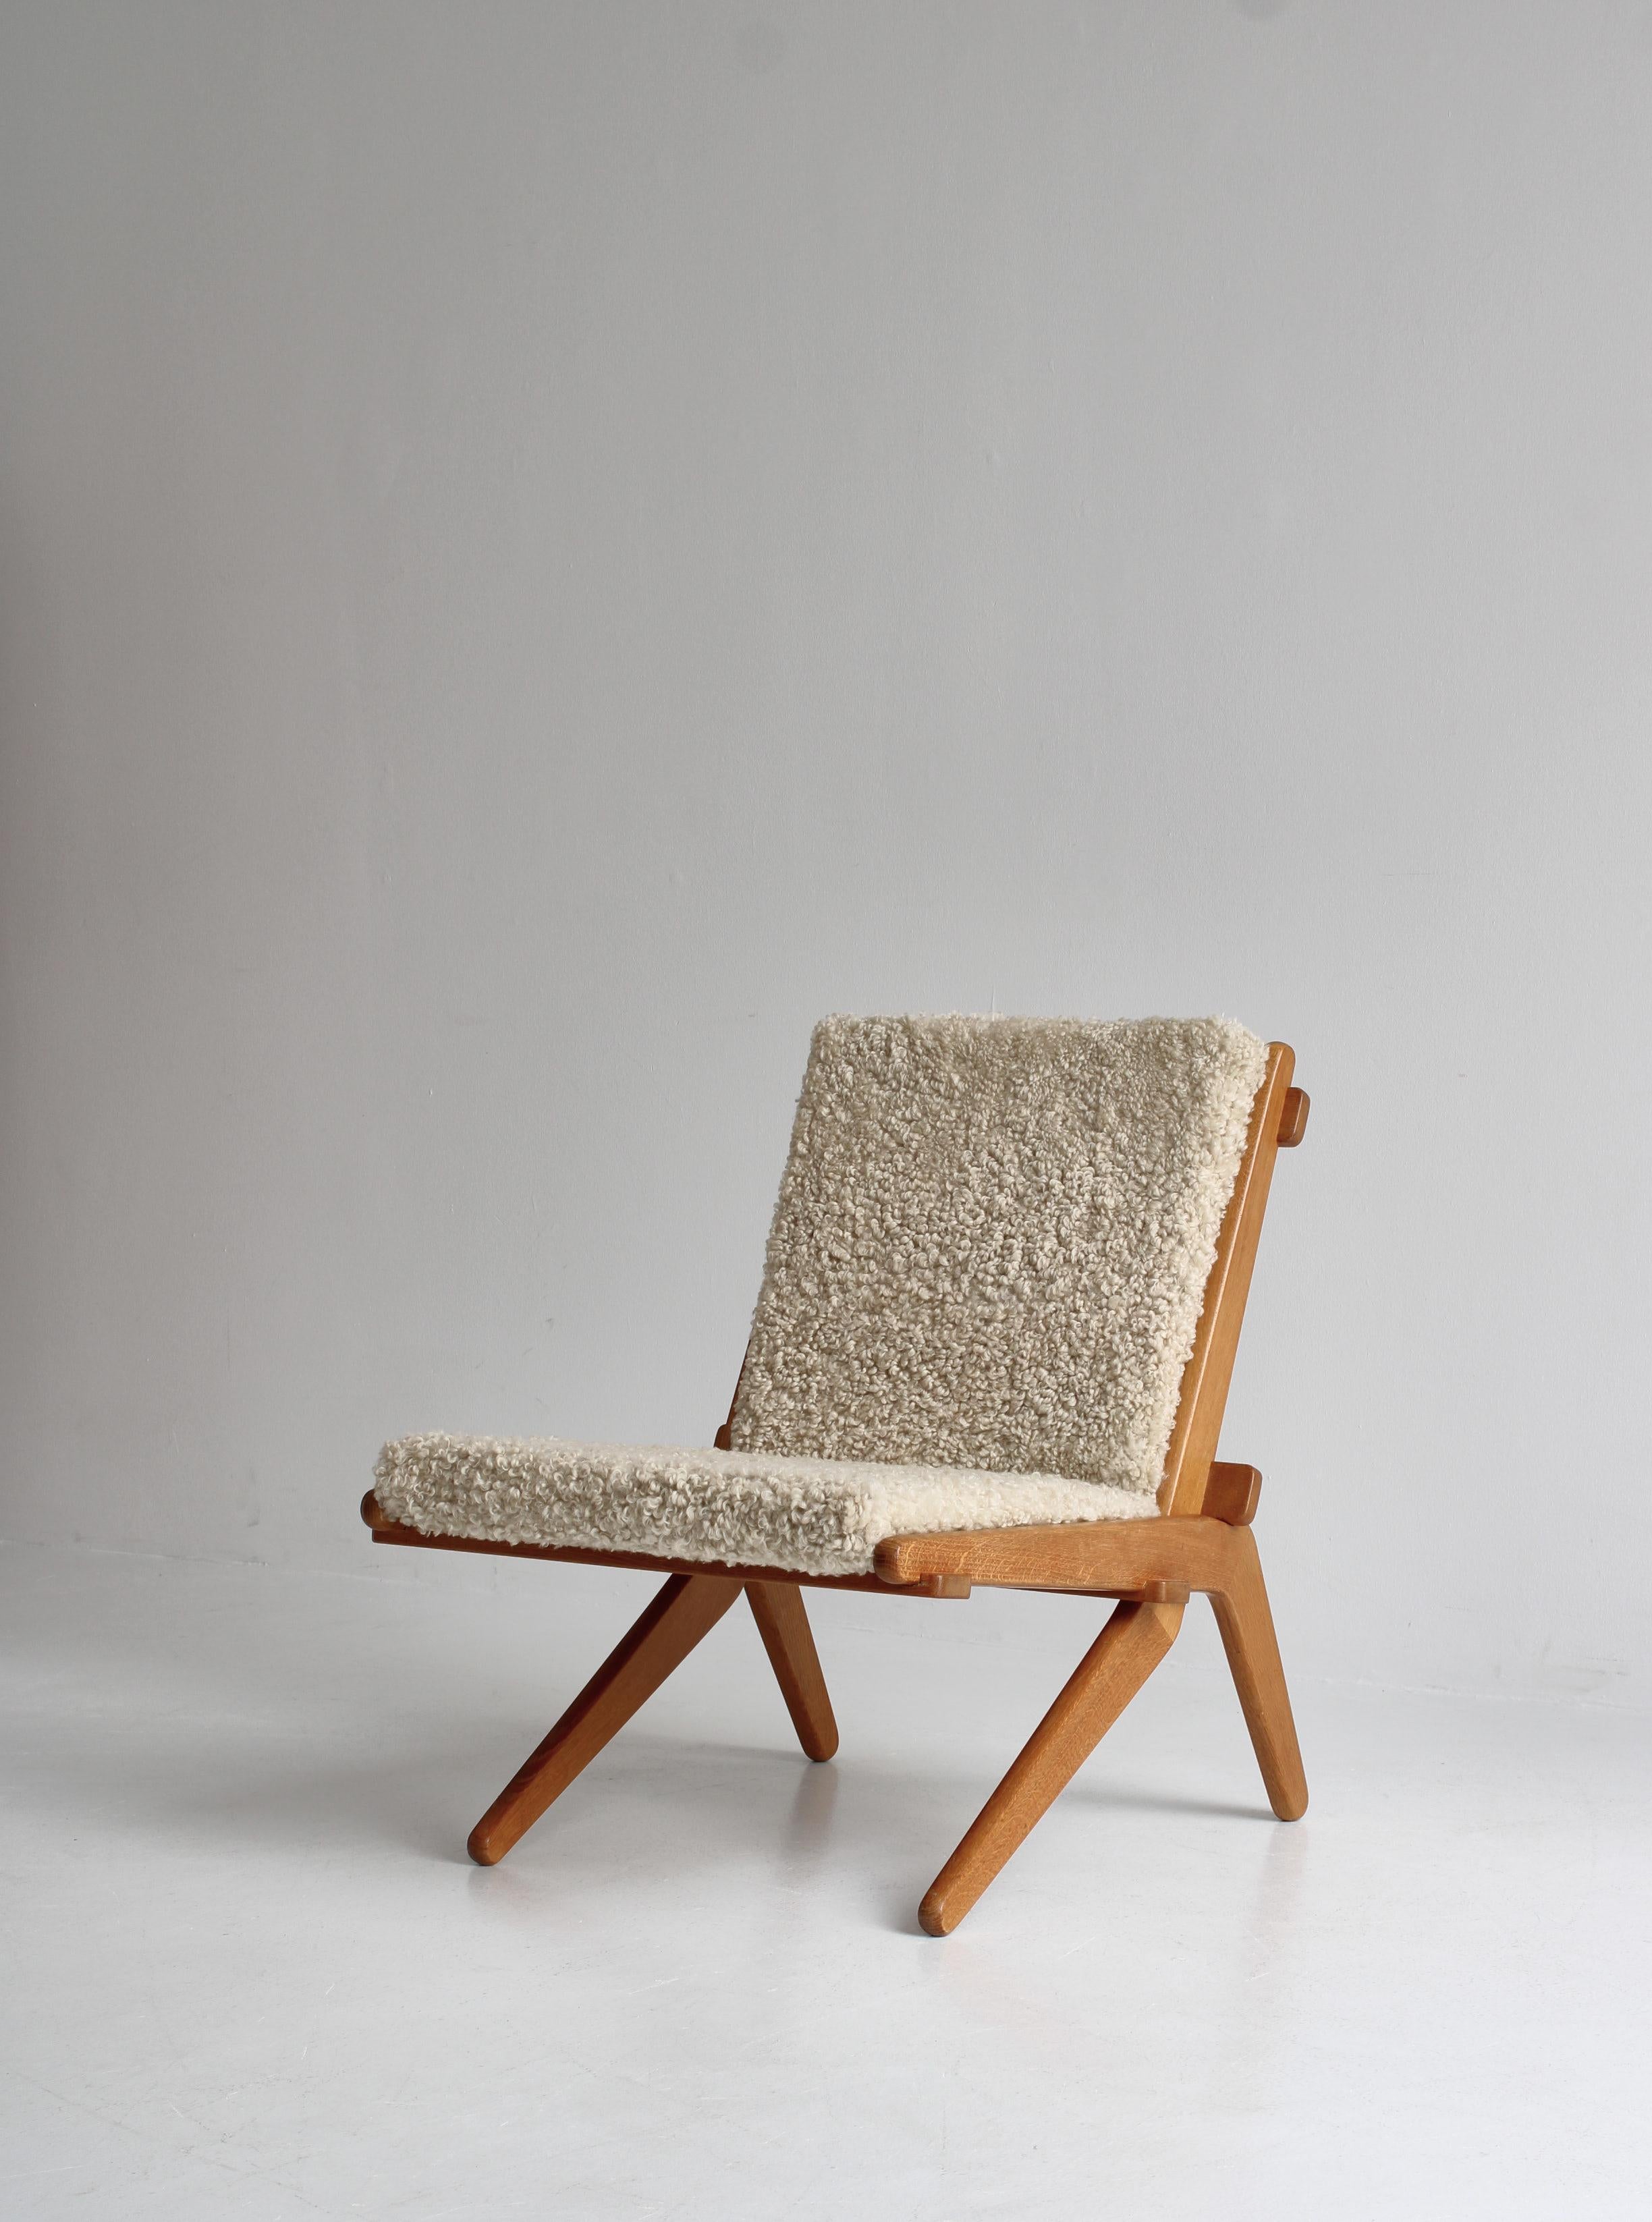 Mid-20th Century Danish Modern Folding Chair in Oak and Natural Sheepskin, Preben Thorsen, 1950s For Sale